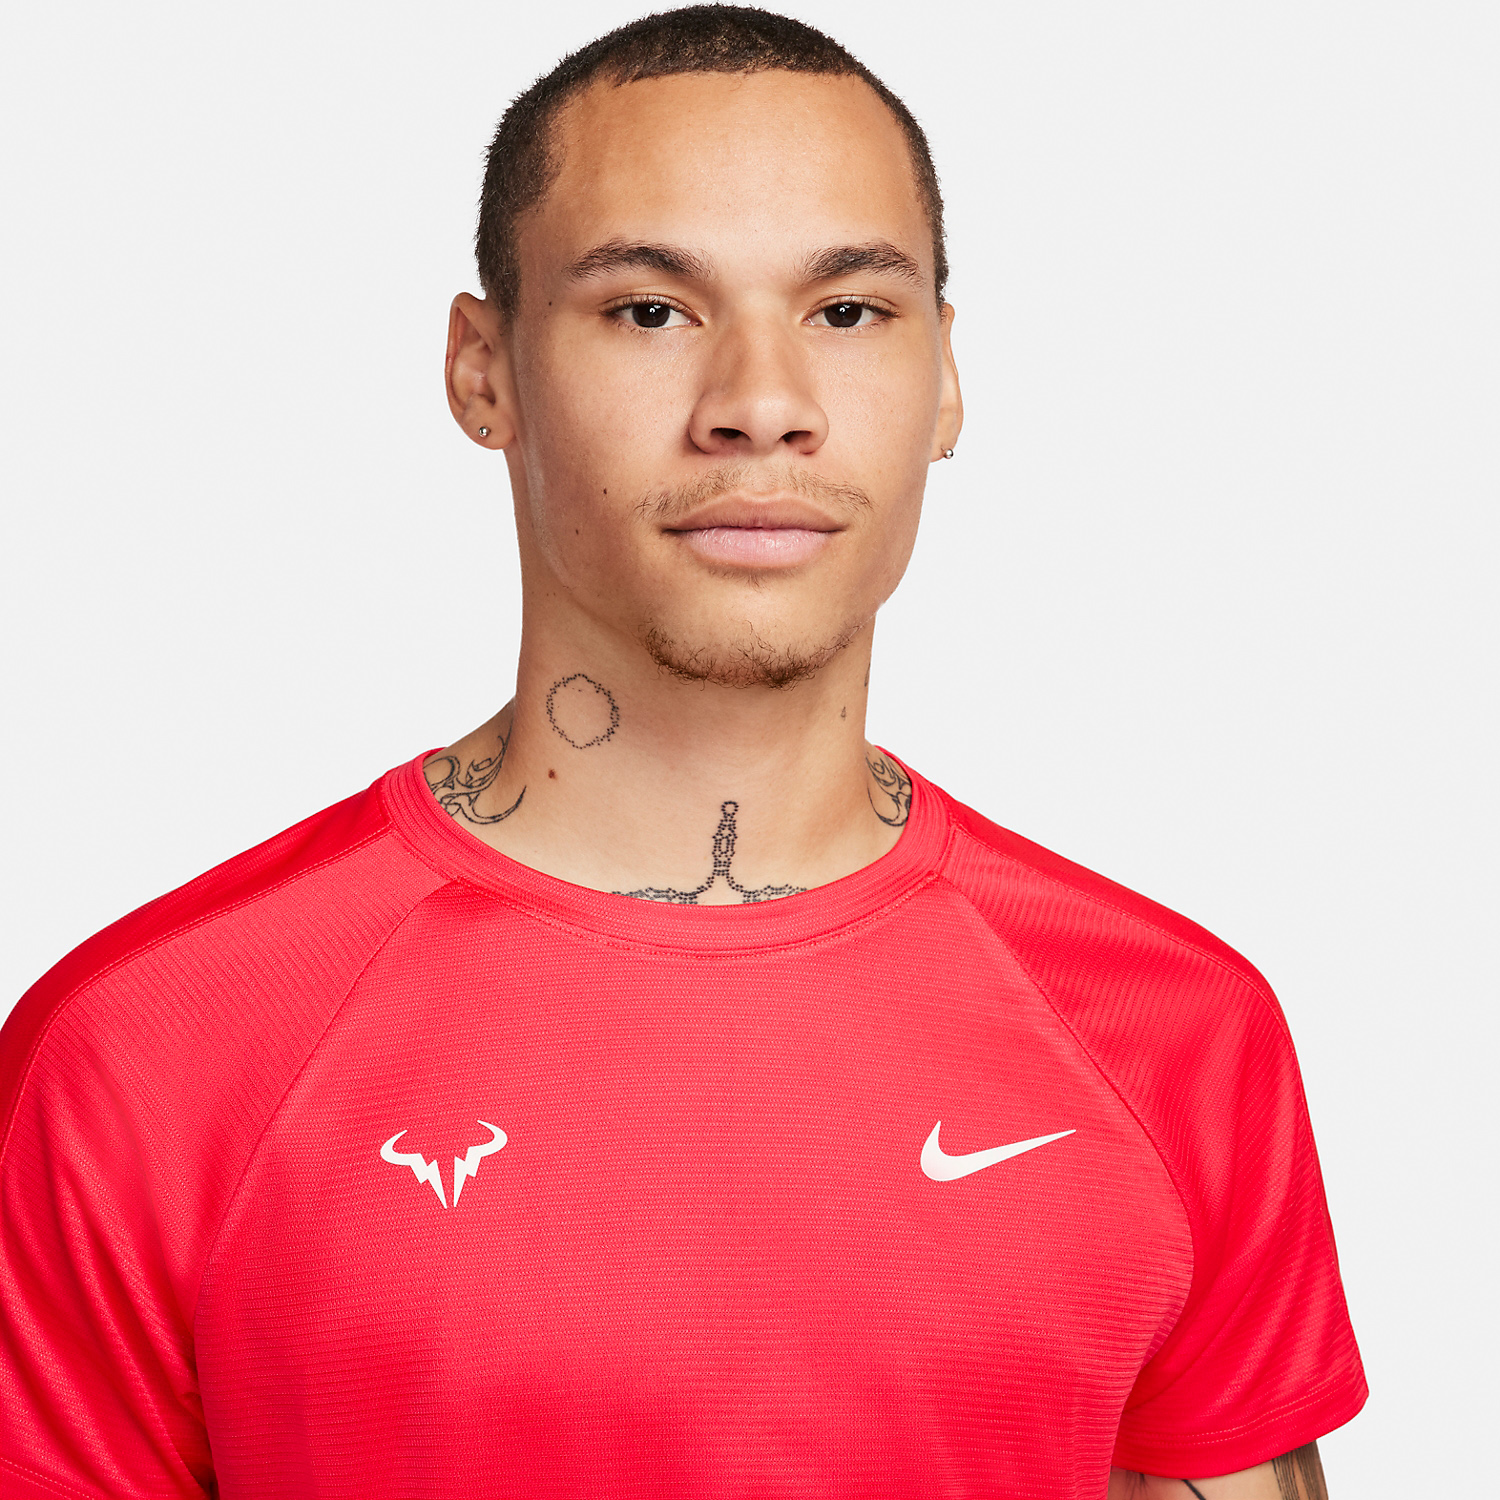 Nike Rafa Challenger T-Shirt - Siren Red/White